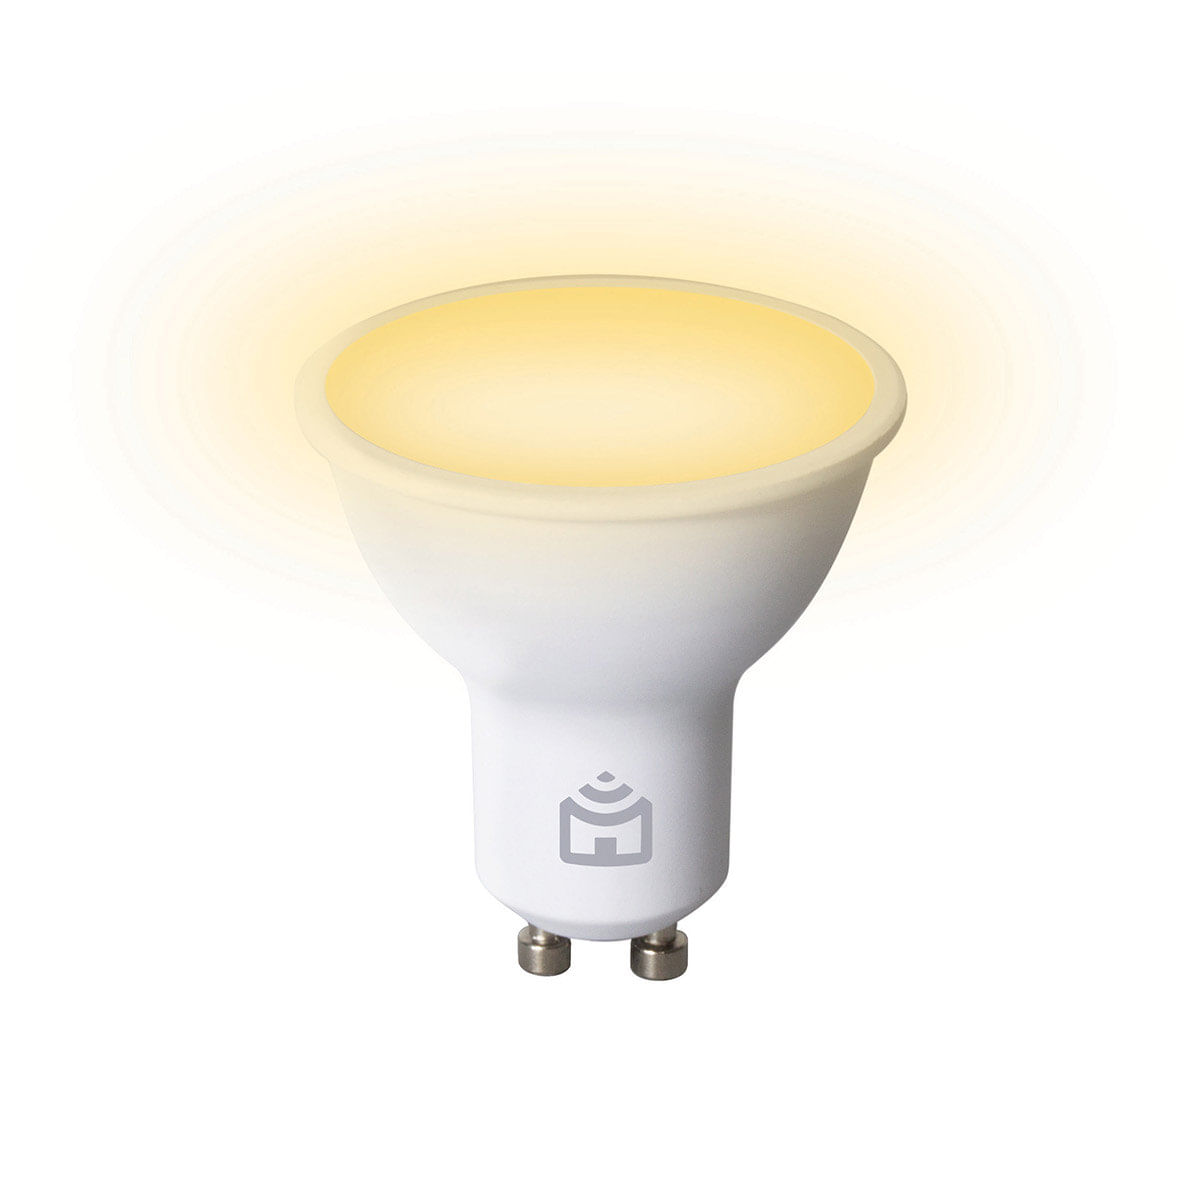 6151647_Smart-Lampada-Spot-Wi-Fi-Positivo-Casa-Inteligente_2_Zoom